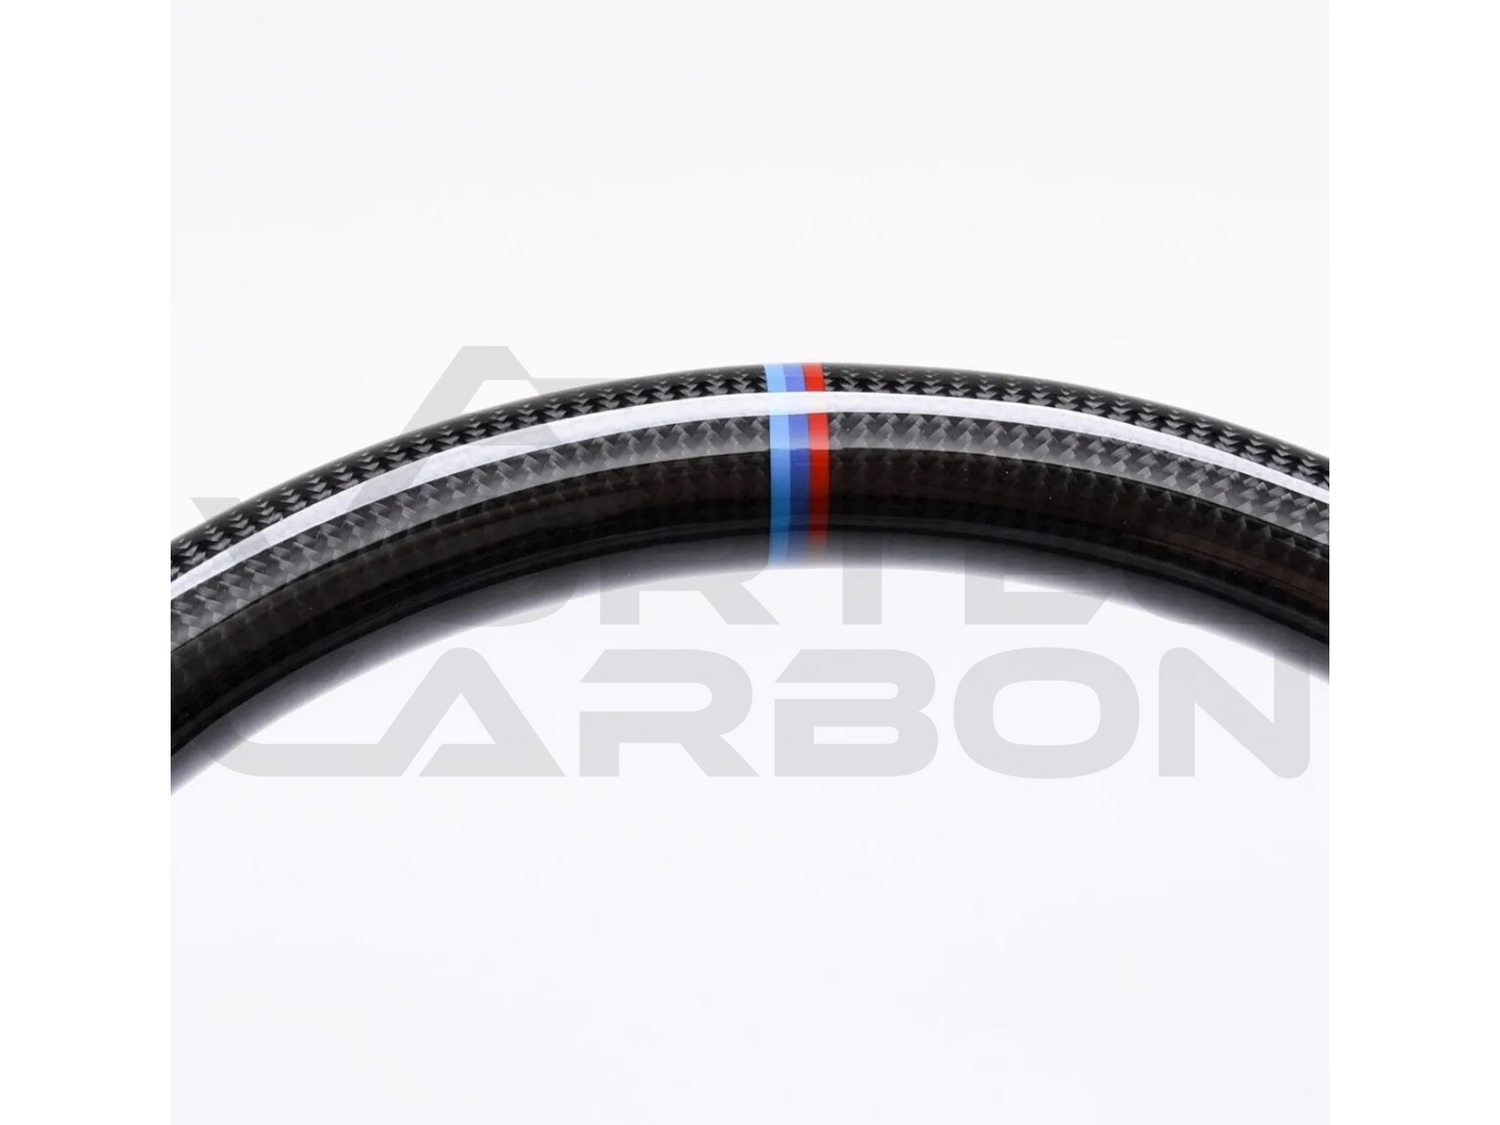 Fully Custom Carbon Fiber Steering Wheel - BMW G Chassis